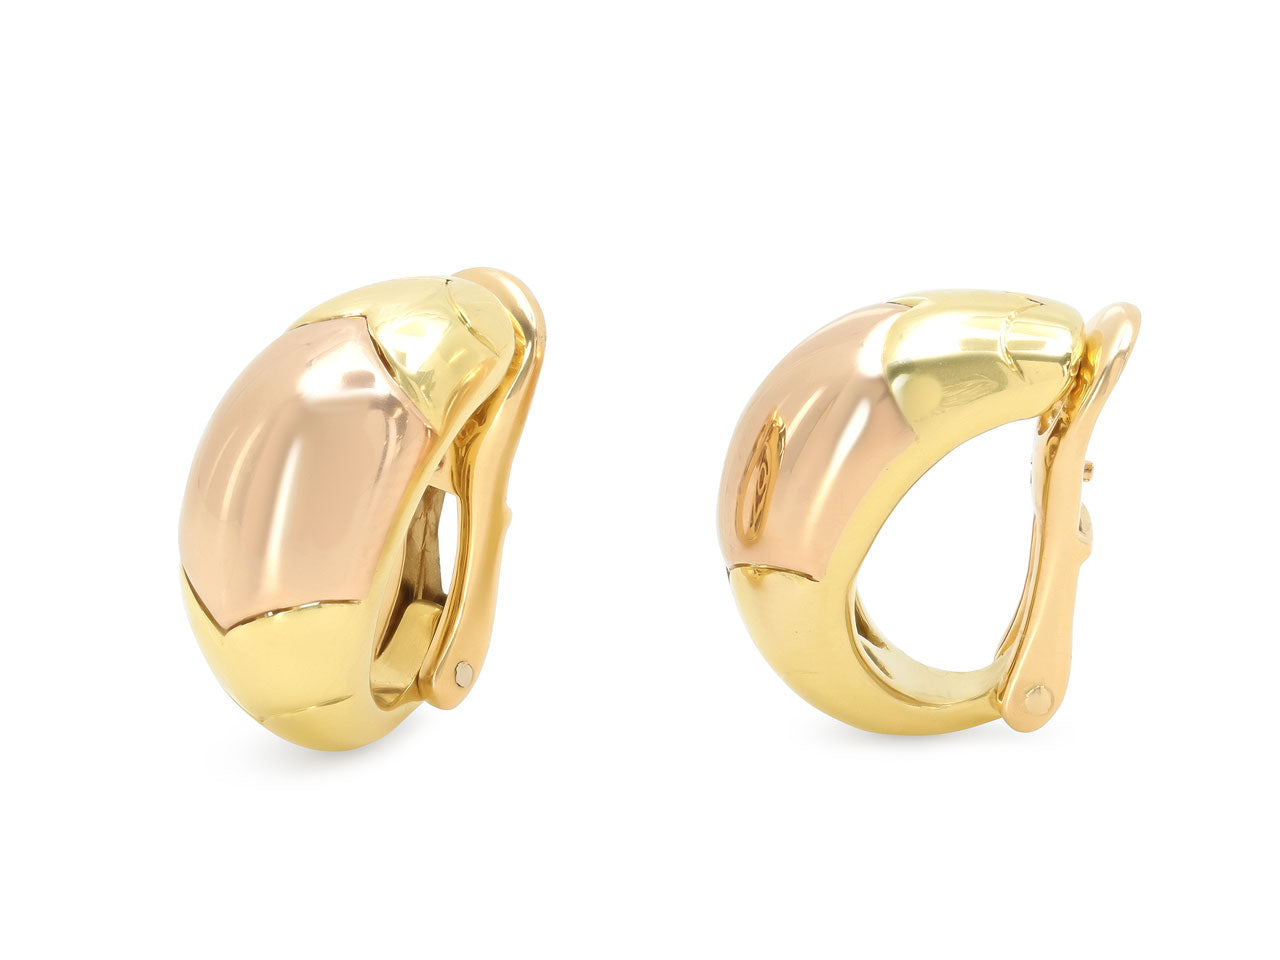 Bulgari 'Tronchetto' Half Hoop Earrings in 18K Yellow and Rose Gold